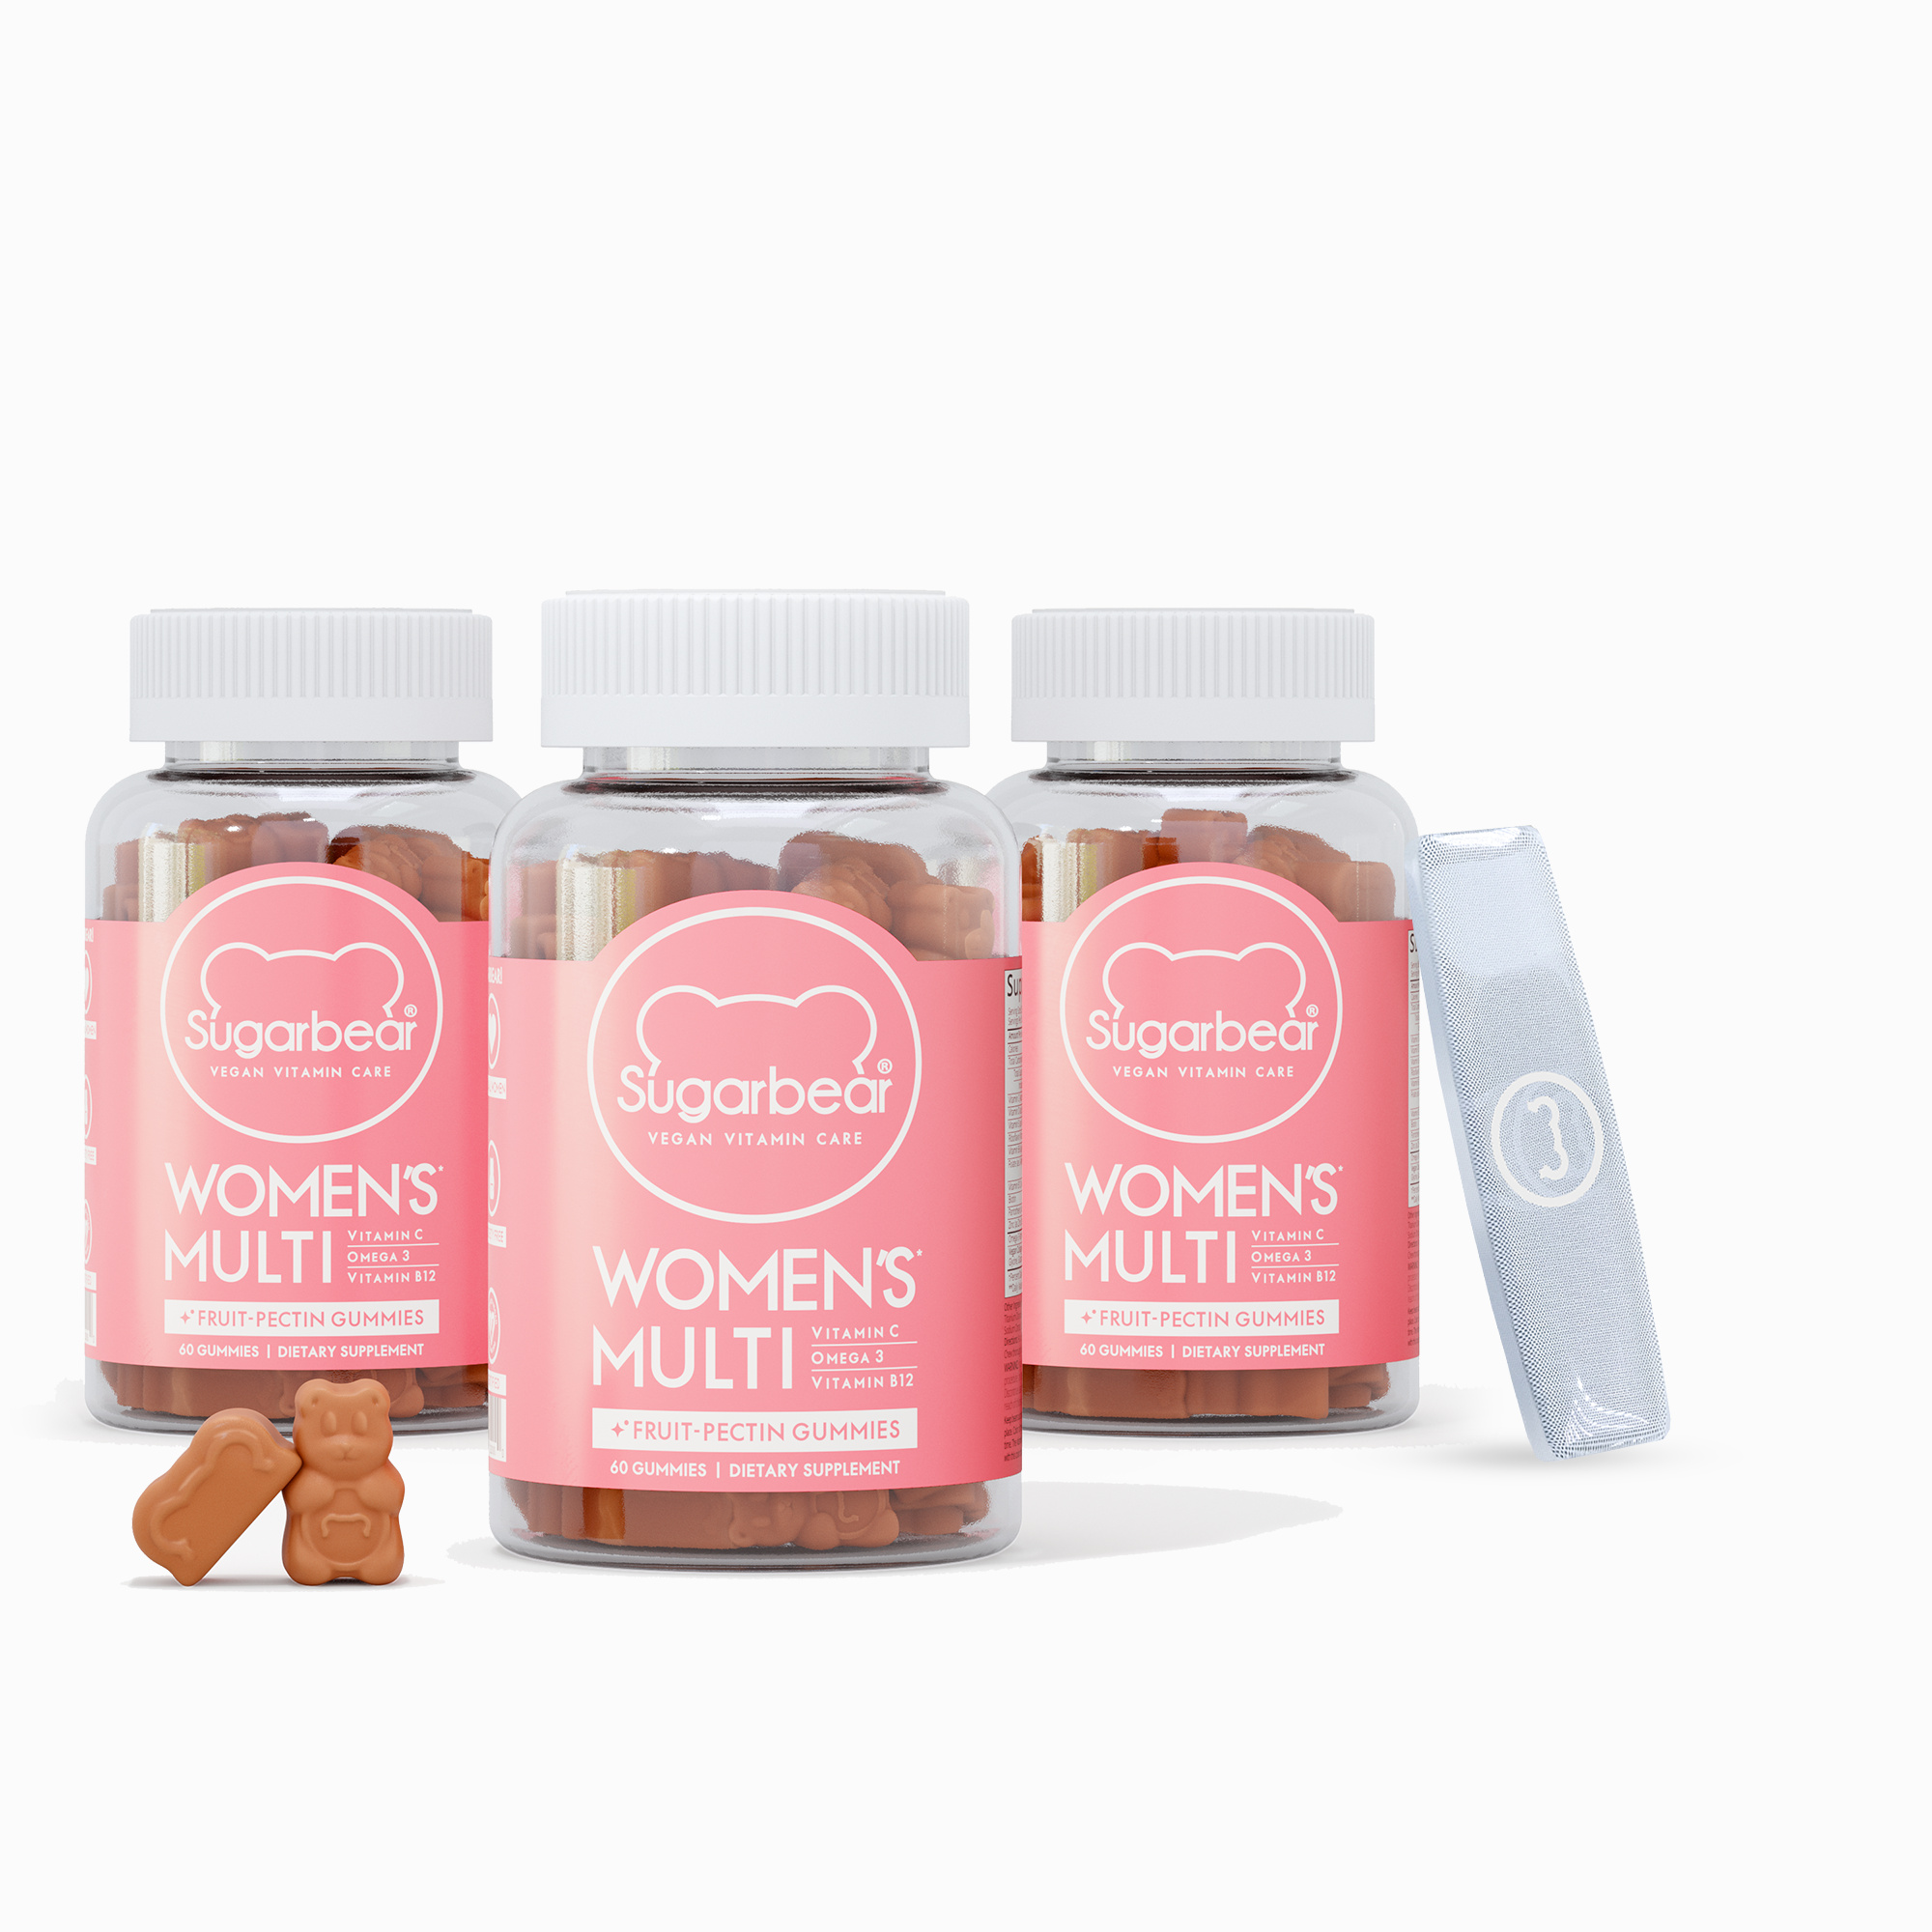 Sugarbear Women's Multi Vitamins - Paquete de 3 meses + regalo gratis